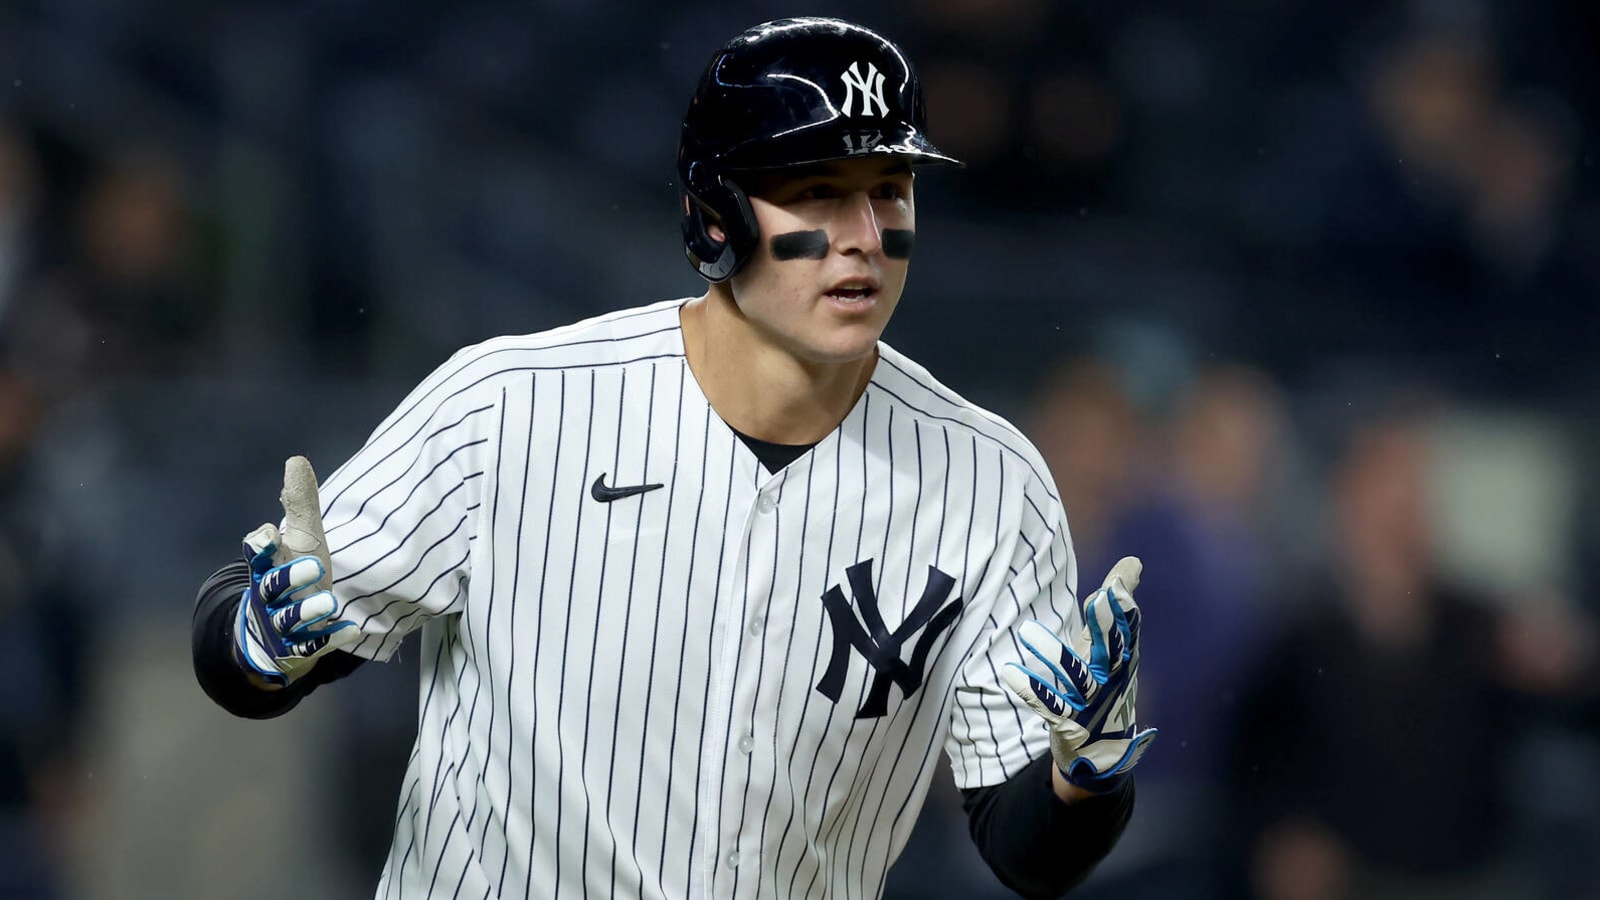 New York Yankees 1B Anthony Rizzo hits first home run at Yankee Stadium -  Sports Illustrated NY Yankees News, Analysis and More